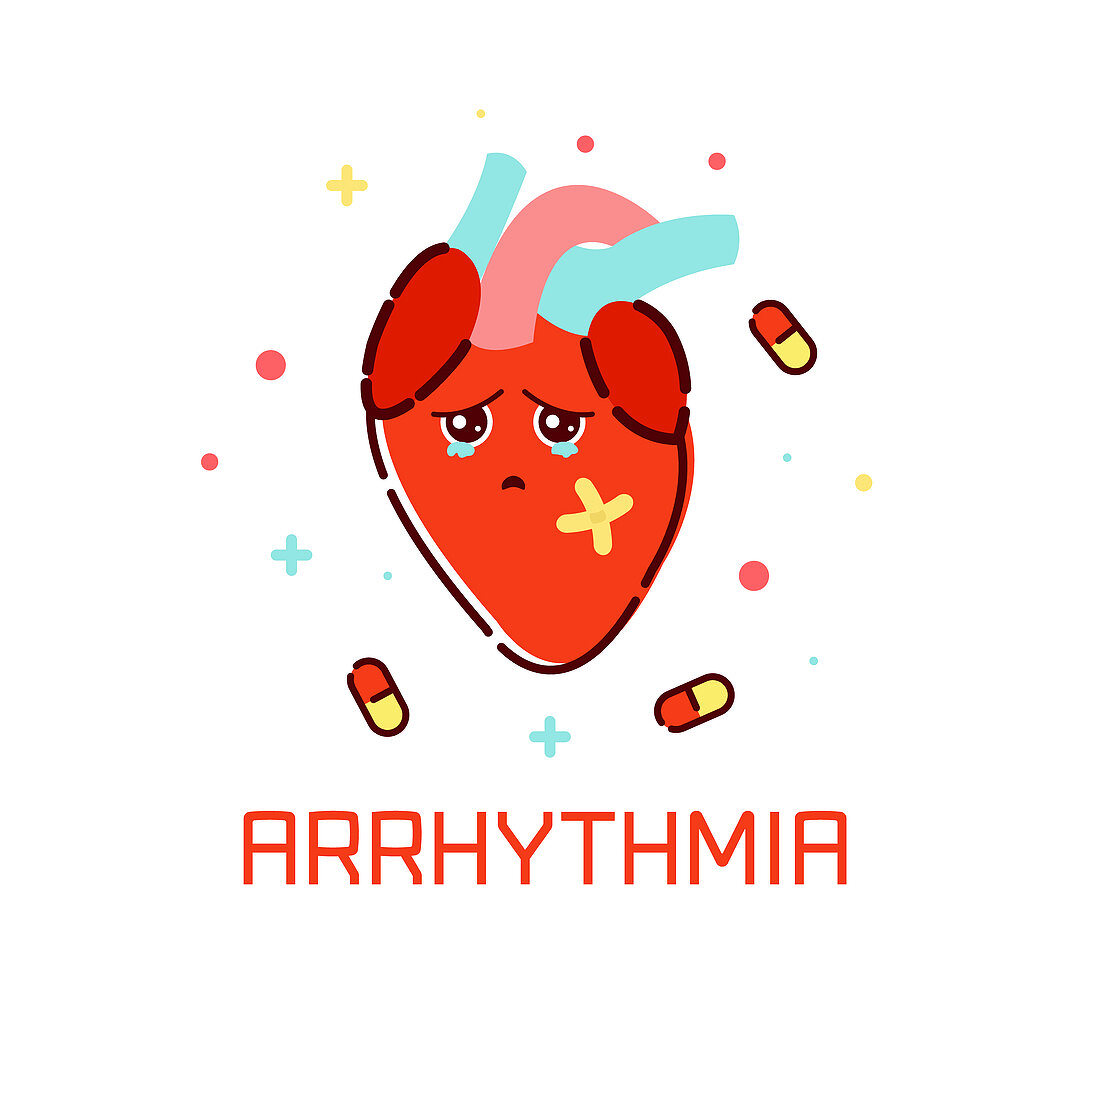 Arrhythmia heart disease, conceptual illustration